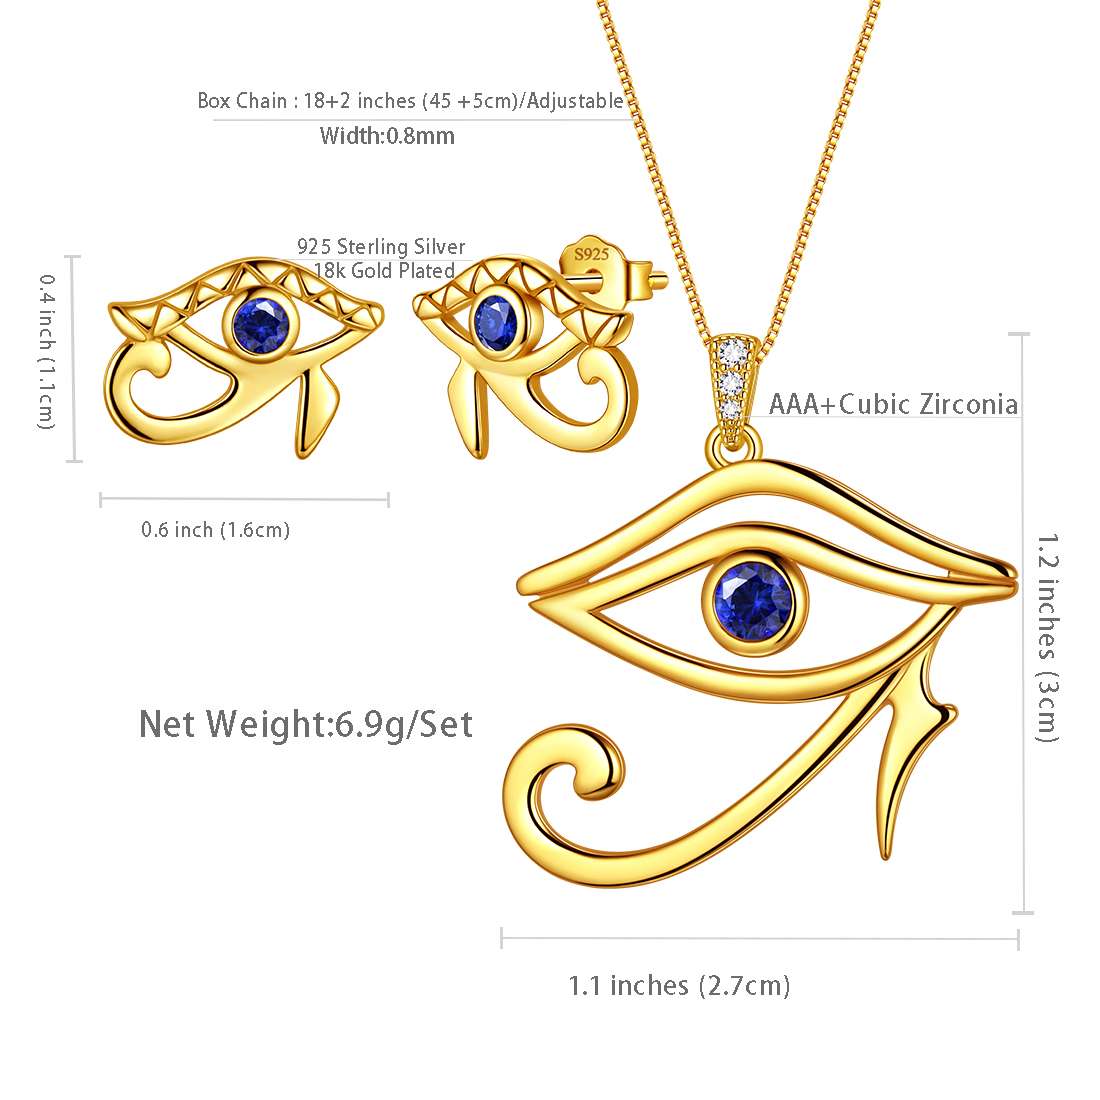 Egyptian Eye of Horus Earrings Necklace Jewelry Sets 3PCS - Jewelry Set - Aurora Tears Jewelry